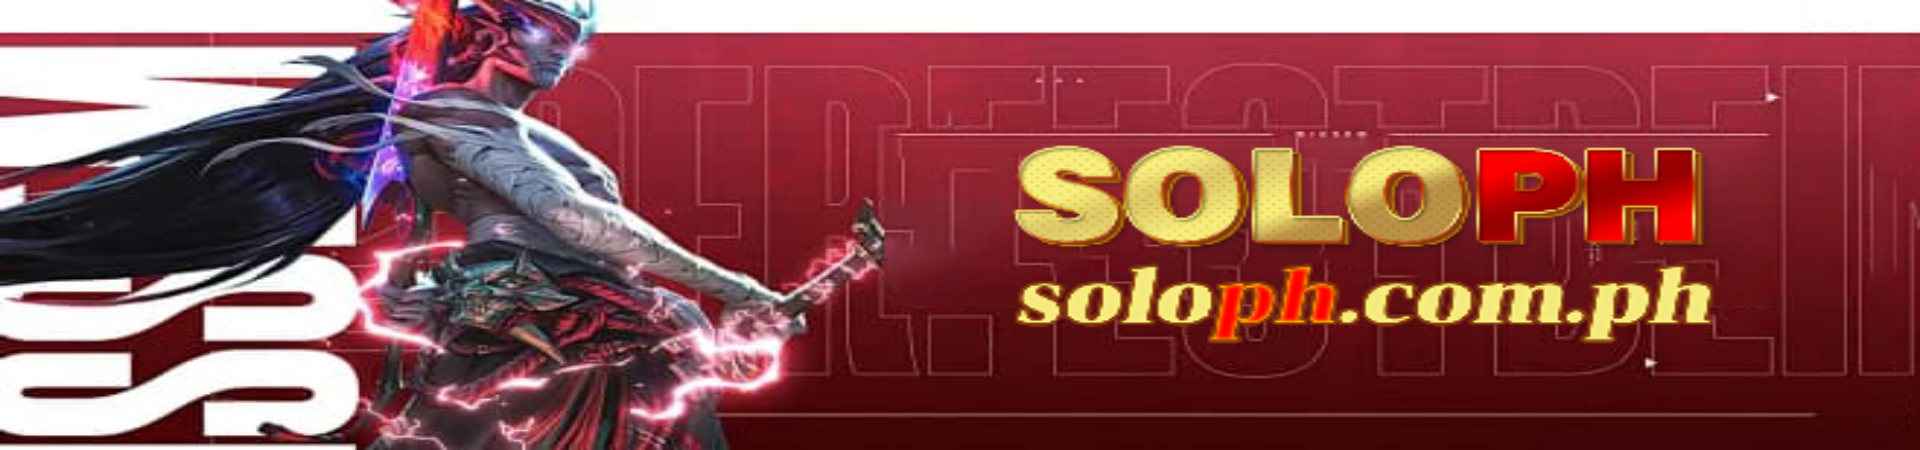 esports soloph banner